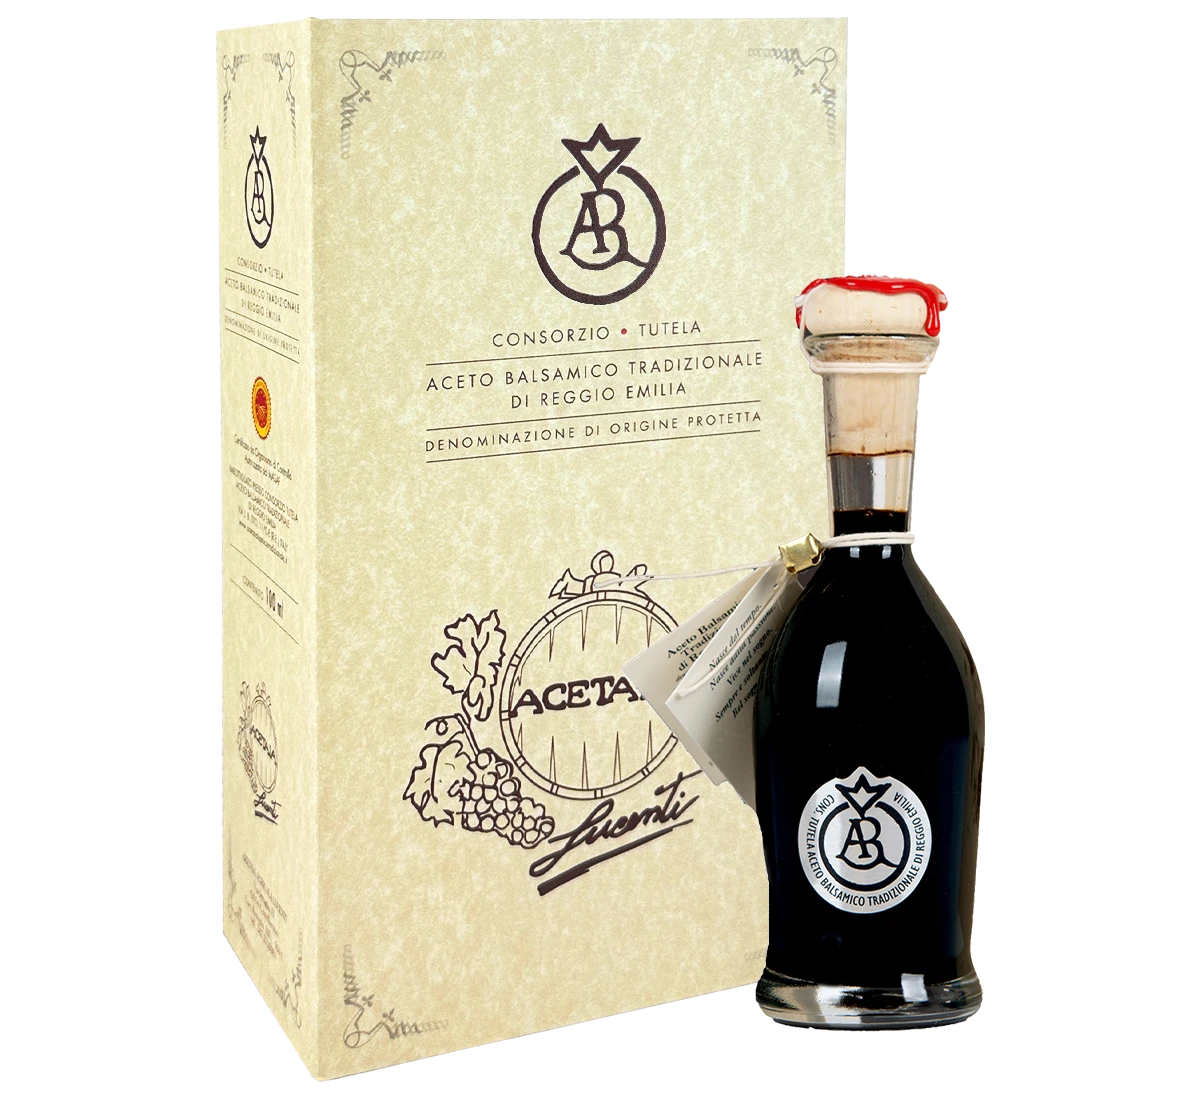 Traditional Balsamic Vinegar of Reggio Emilia PDO - Silver - From 12 to 25 Years (100 ml. / 3.38 fl. oz.)